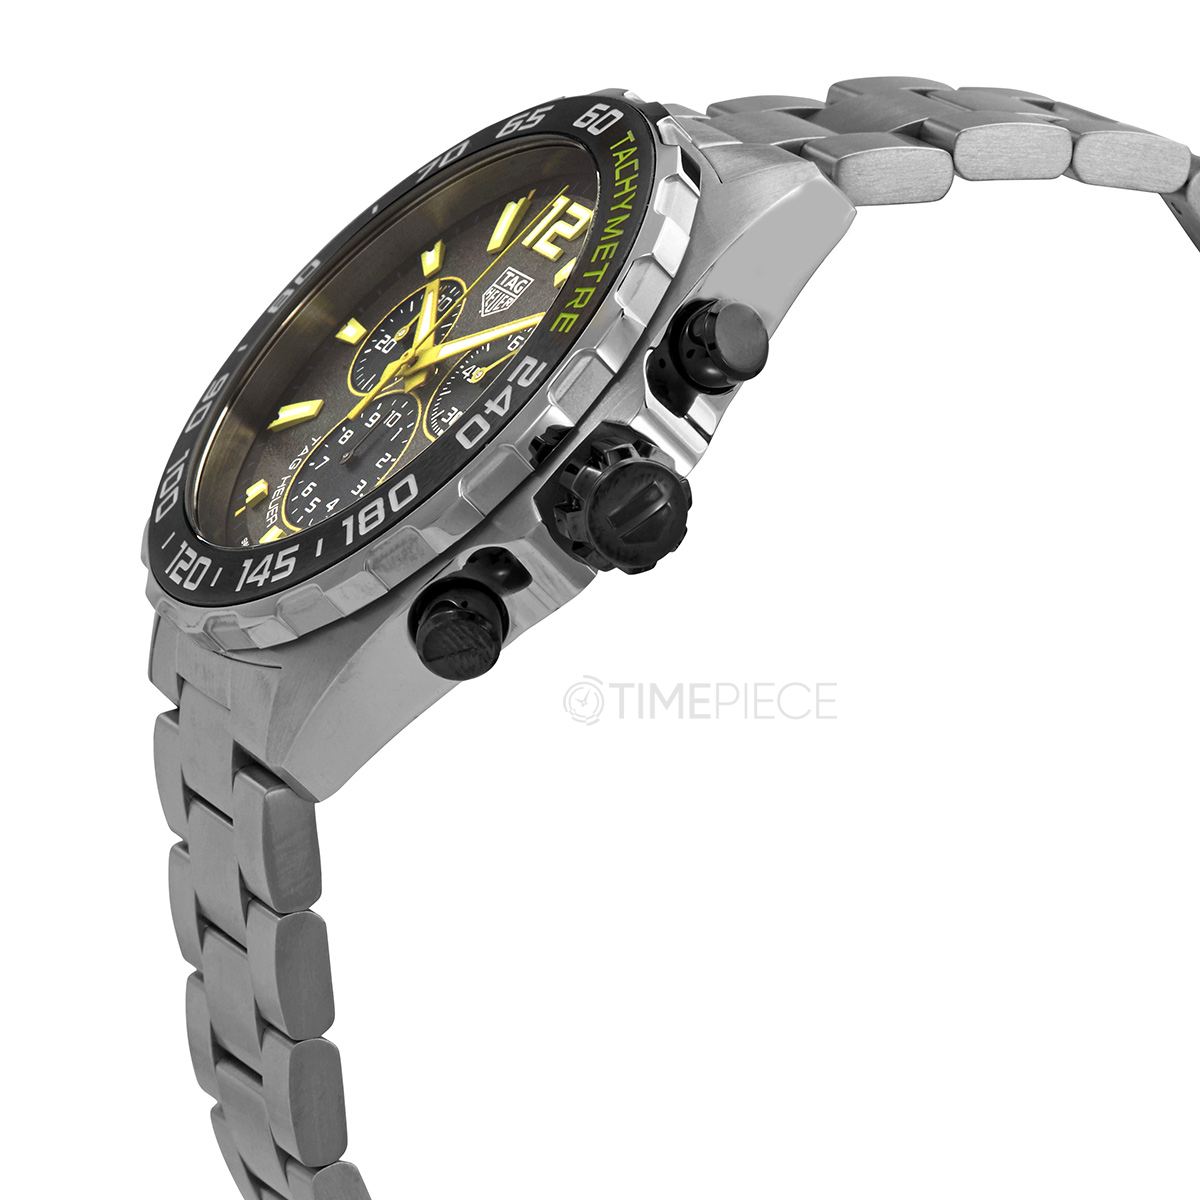 Tag Heuer Formula 1 Chronograph Quartz Black Dial Men's Watch  CAZ101AC.BA0842